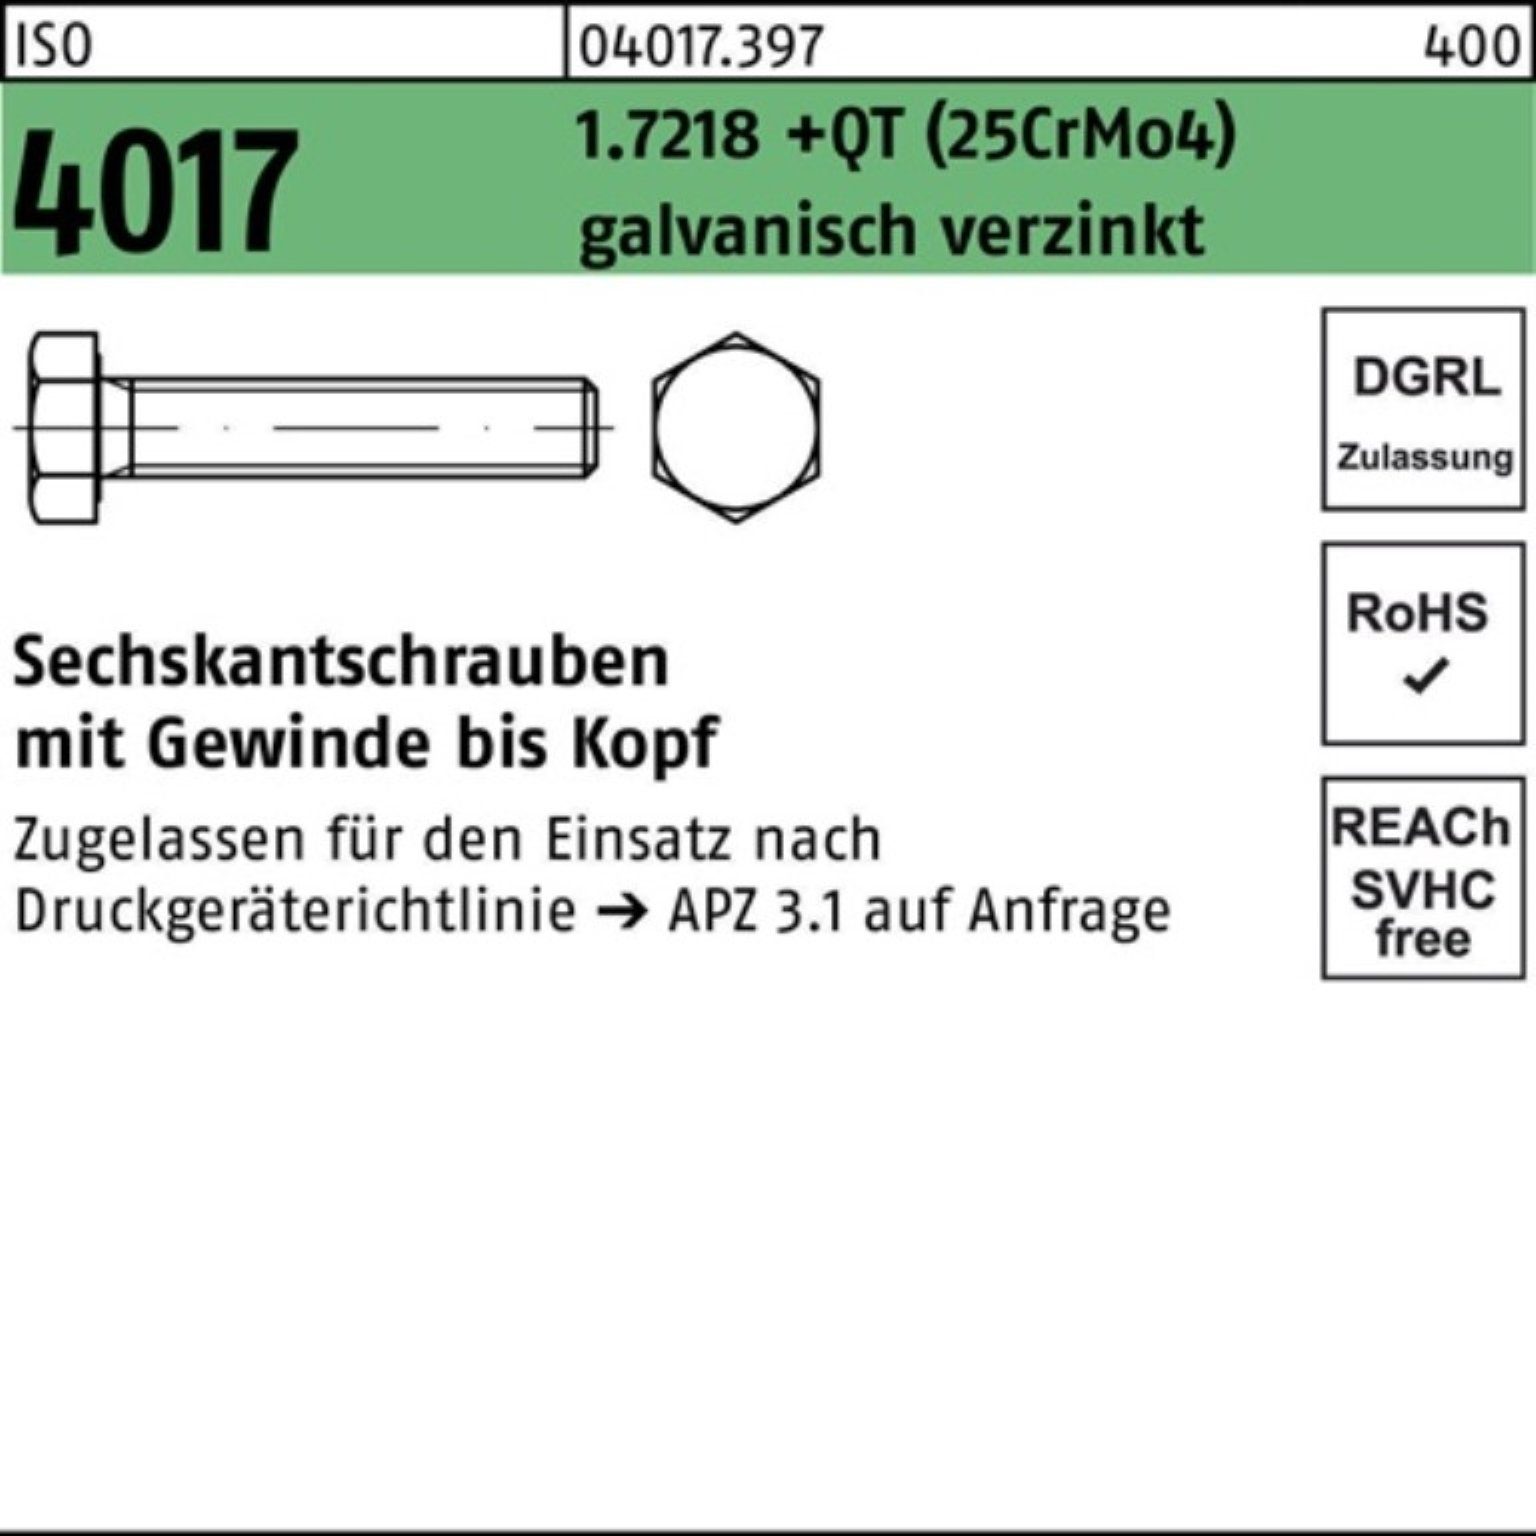 Bufab Sechskantschraube 4017 M33x100 +QT 100er VG ISO 1.7218 Pack (25CrMo4) Sechskantschraube